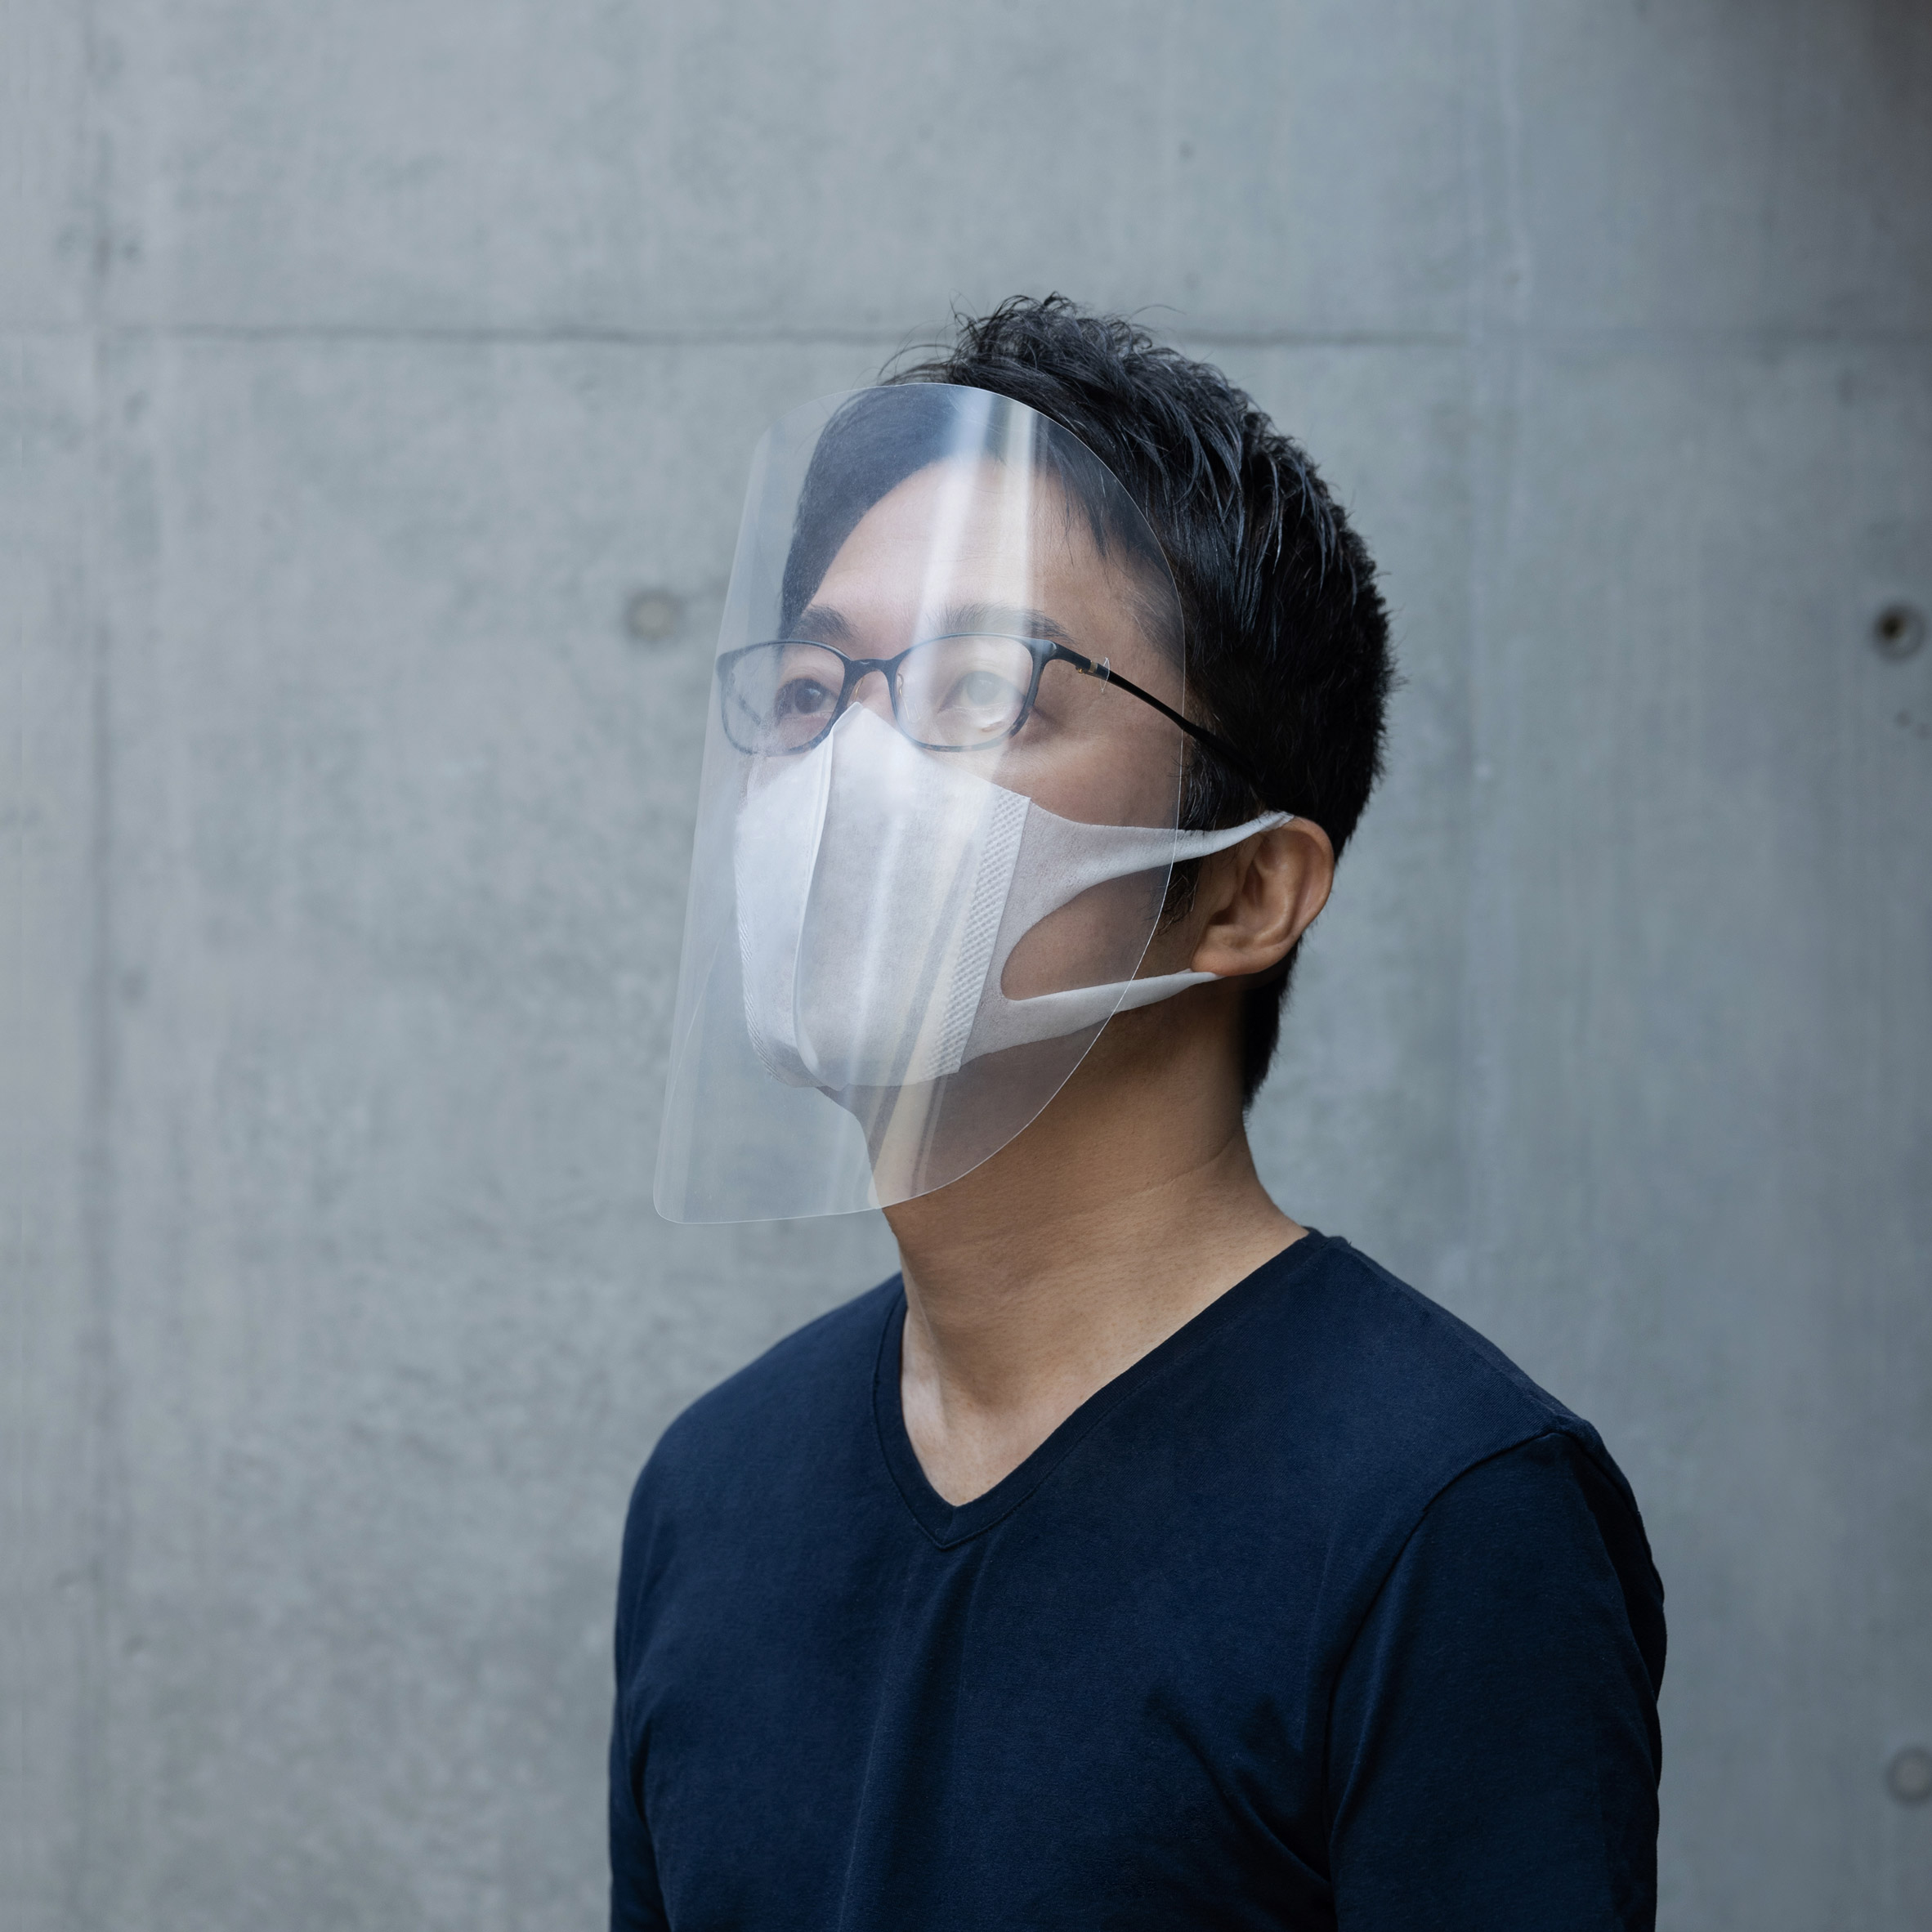 Tokujin Yoshioka Shares Three Step Template For Emergency Face Shields